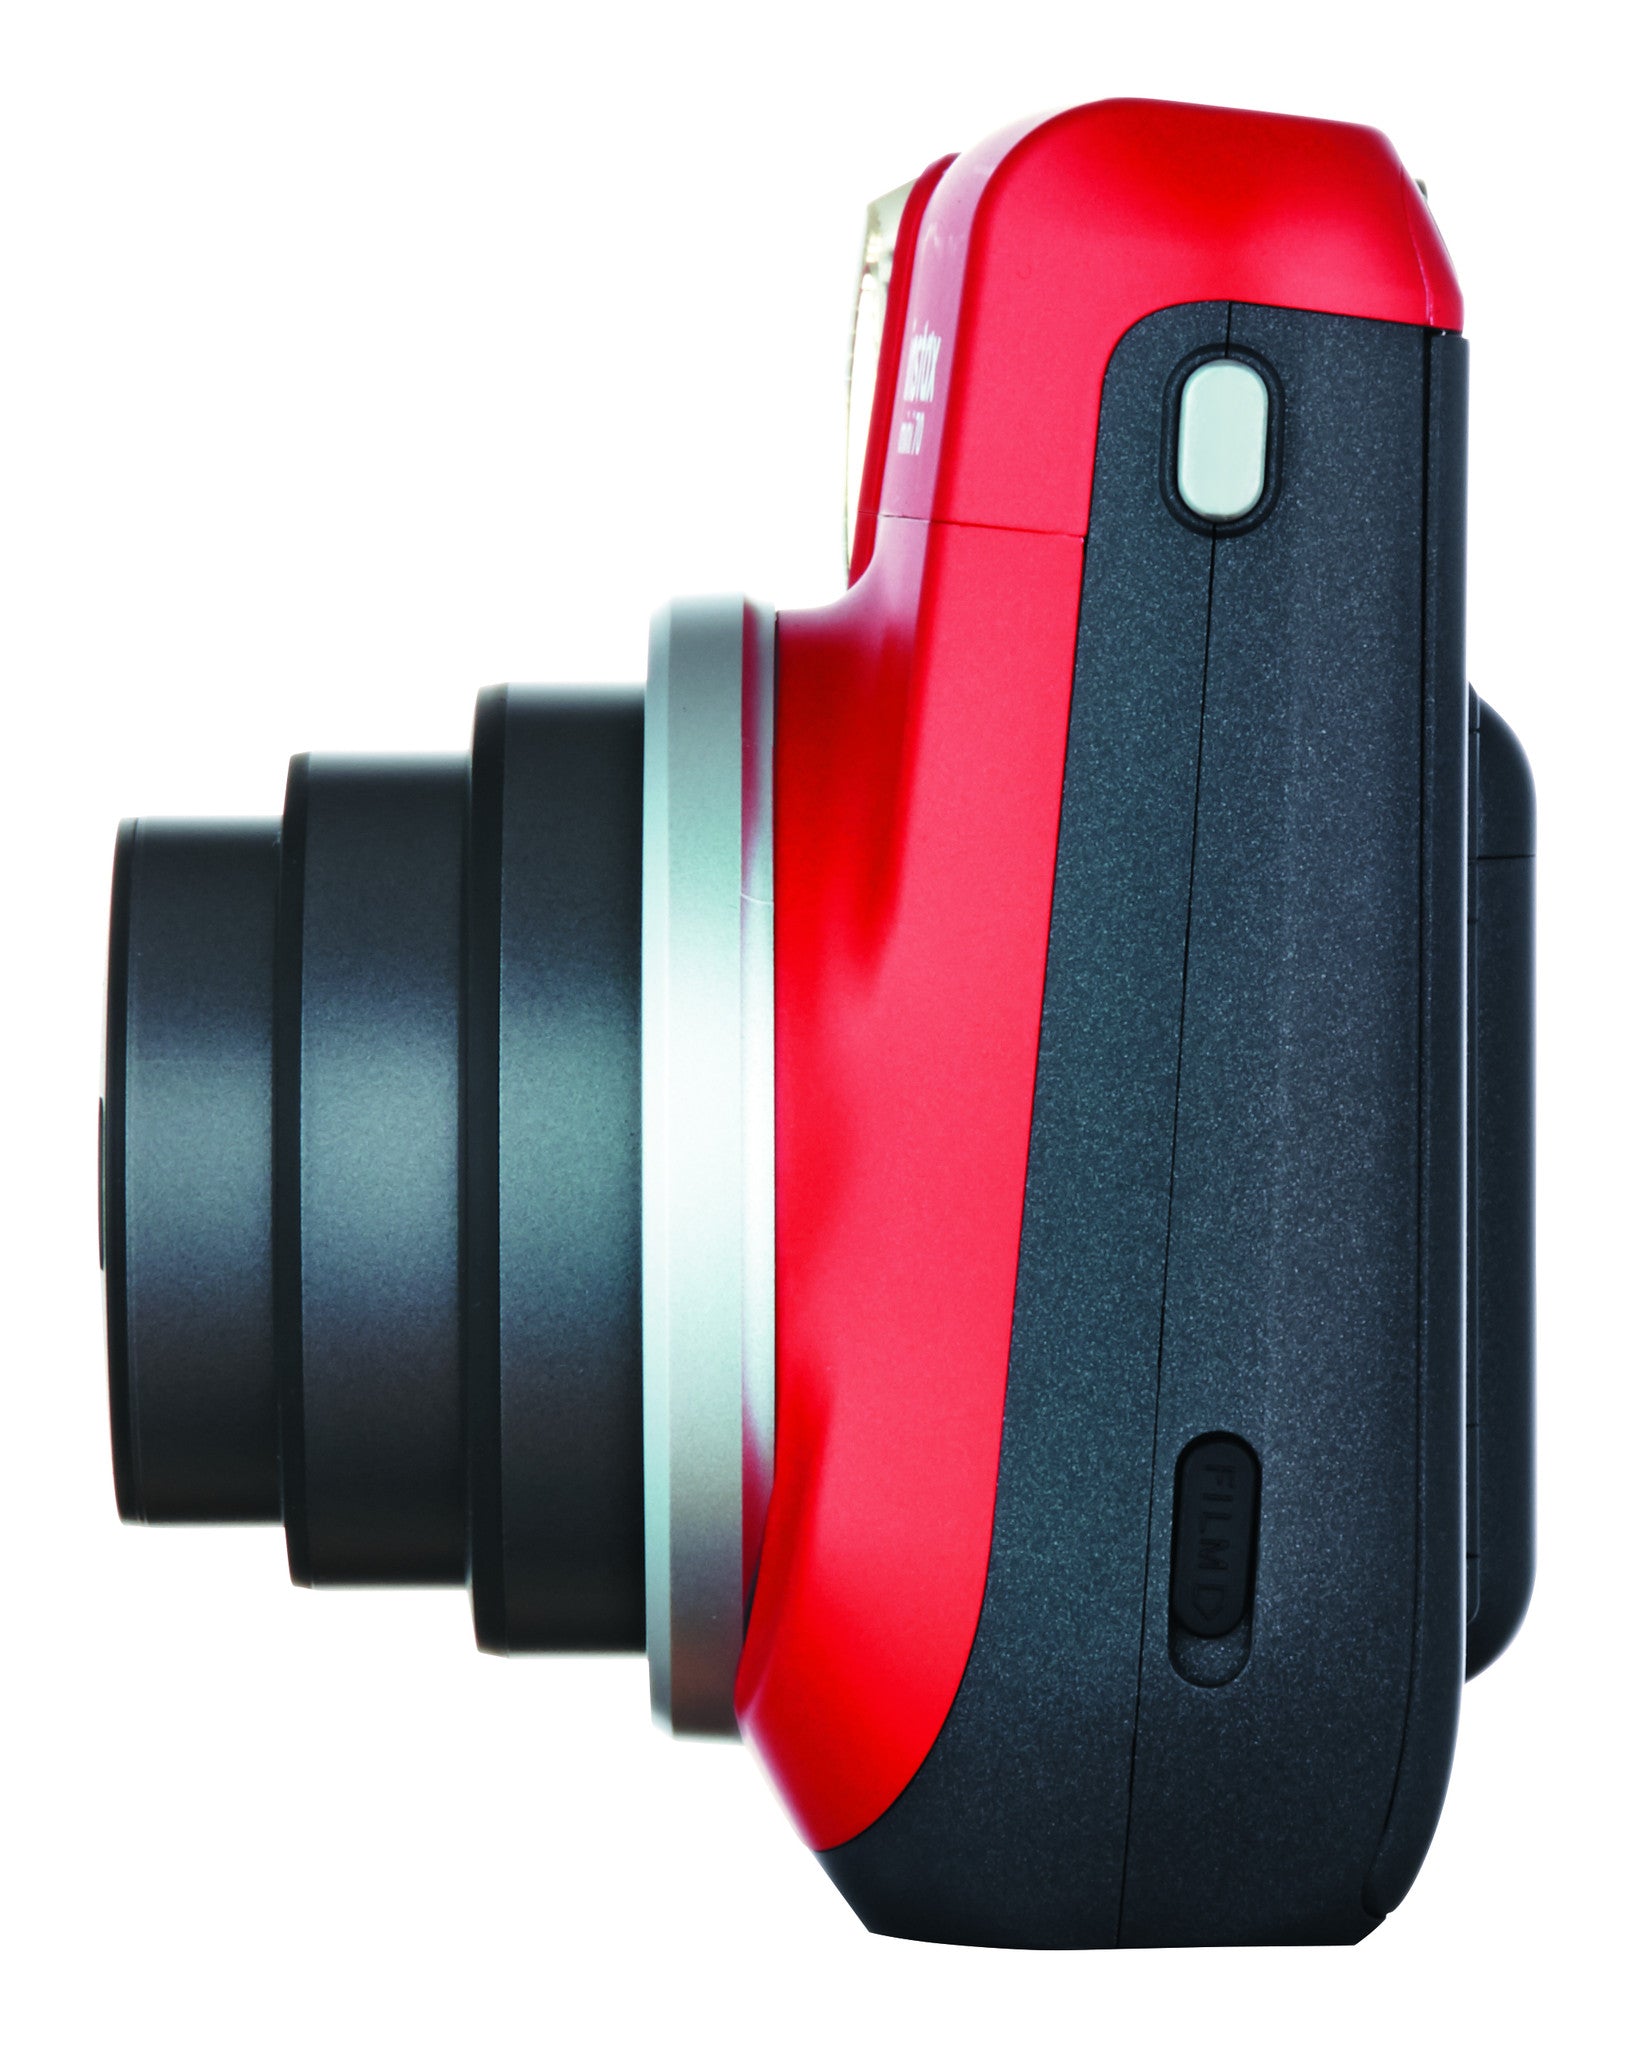 Fujifilm INSTAX Mini 70 Instant Film Camera (Passion Red), camera film cameras, Fujifilm - Pictureline  - 6